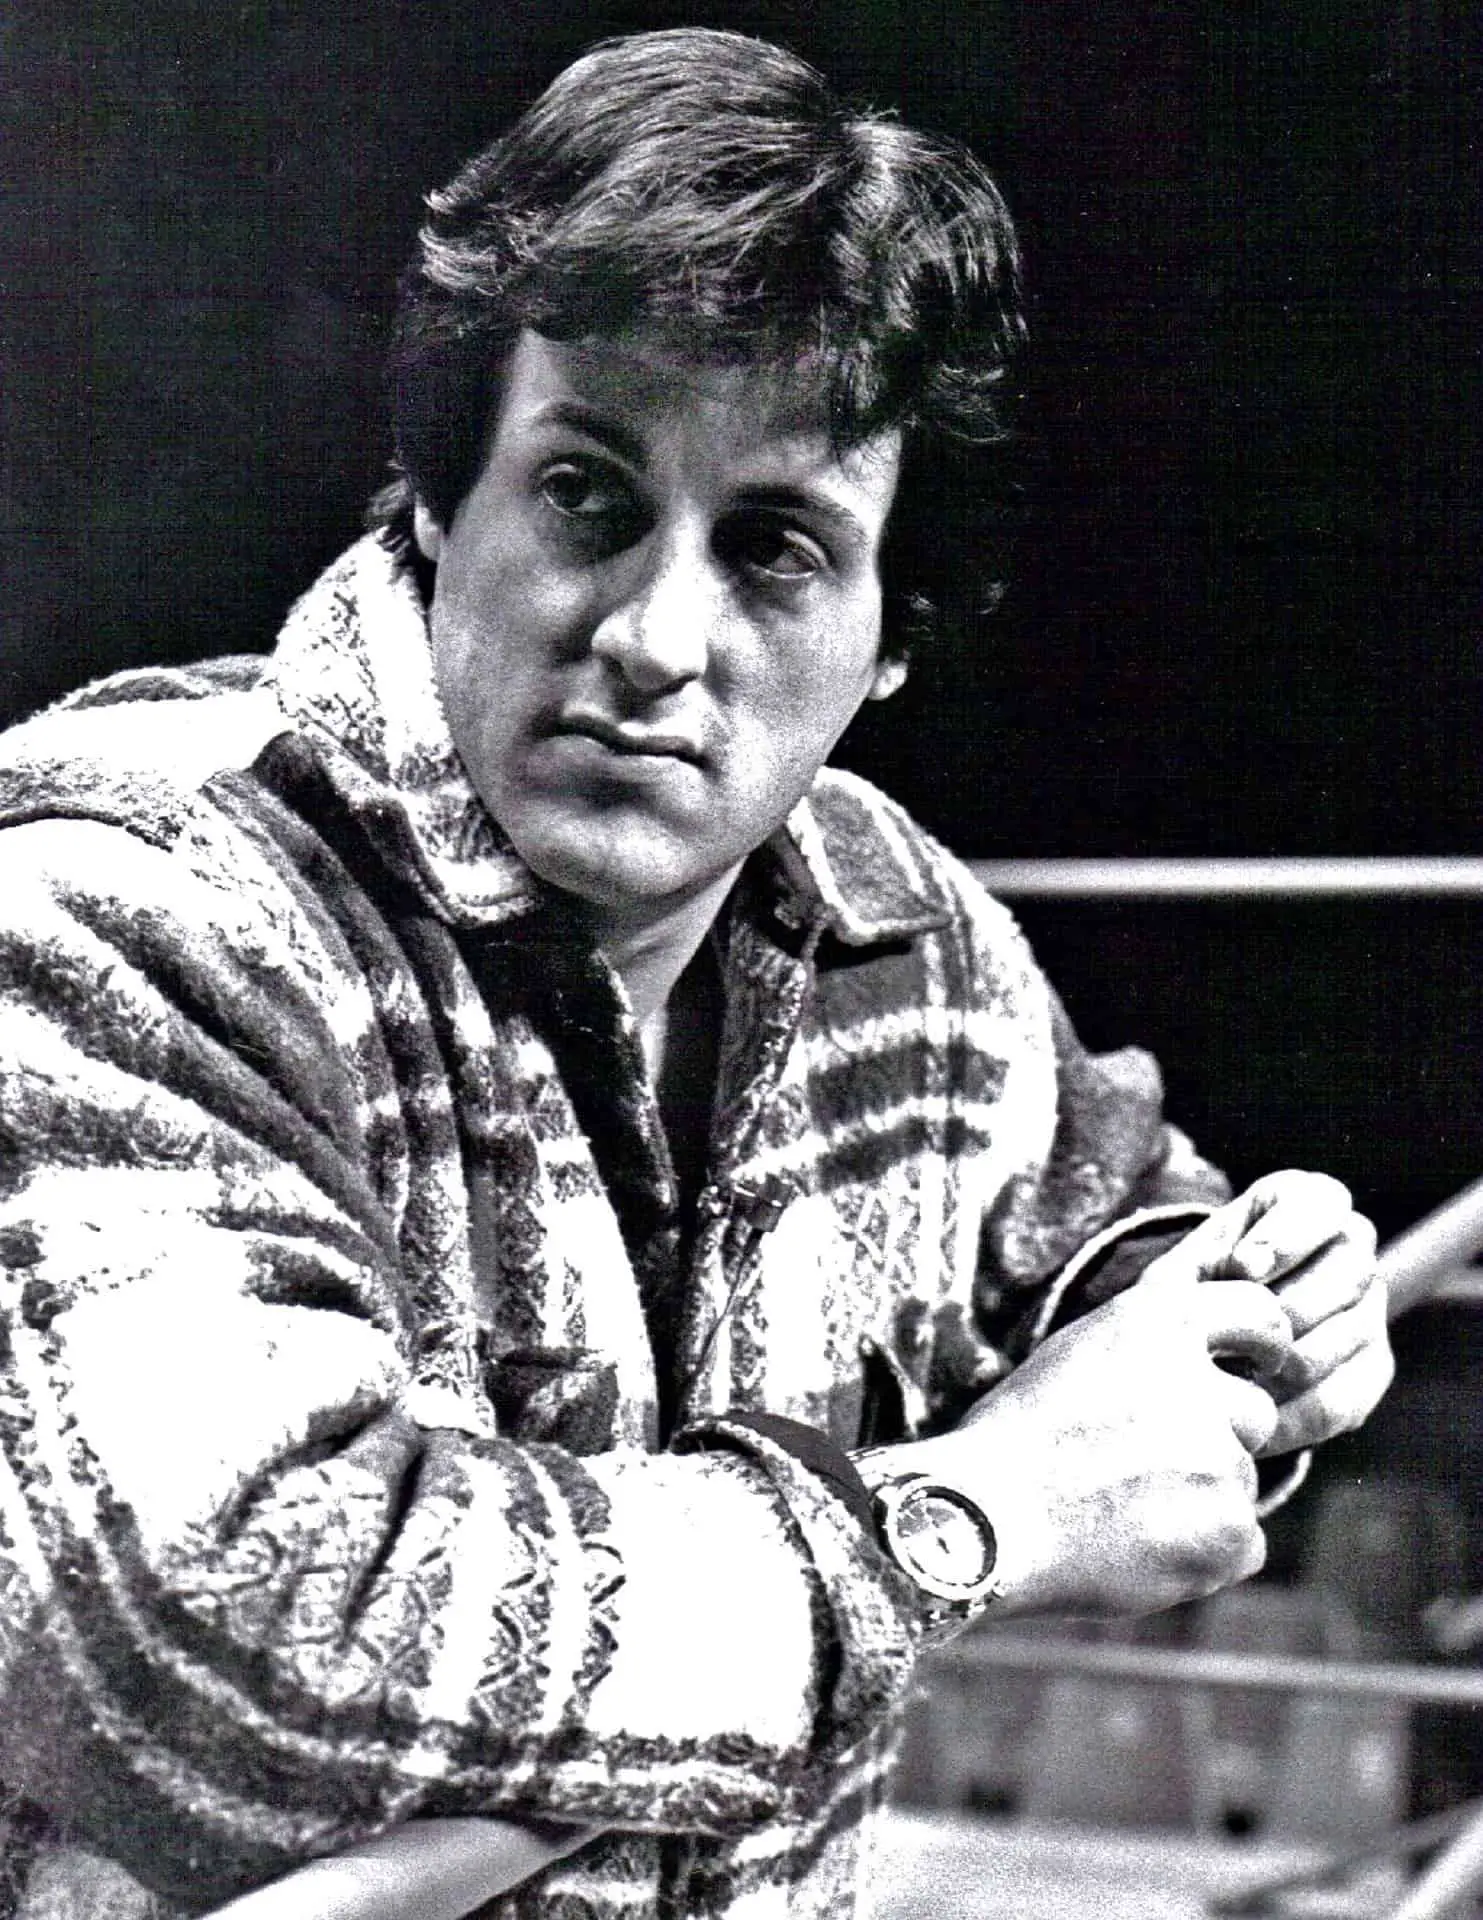 Headshot of Sylvester Stallone